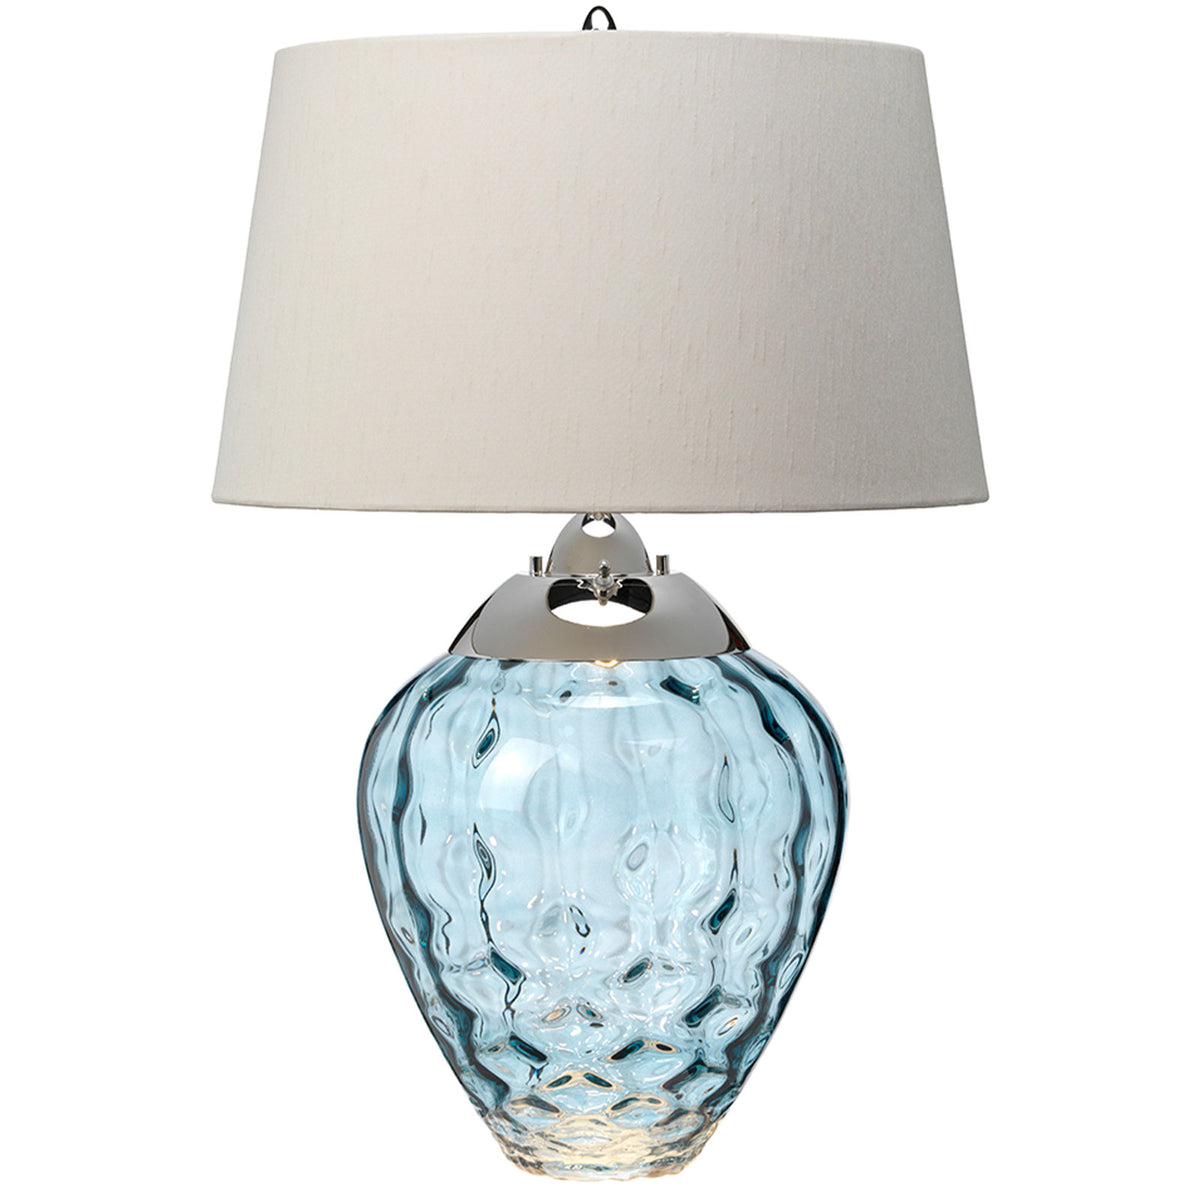 Samara Table Lamp, Light Blue